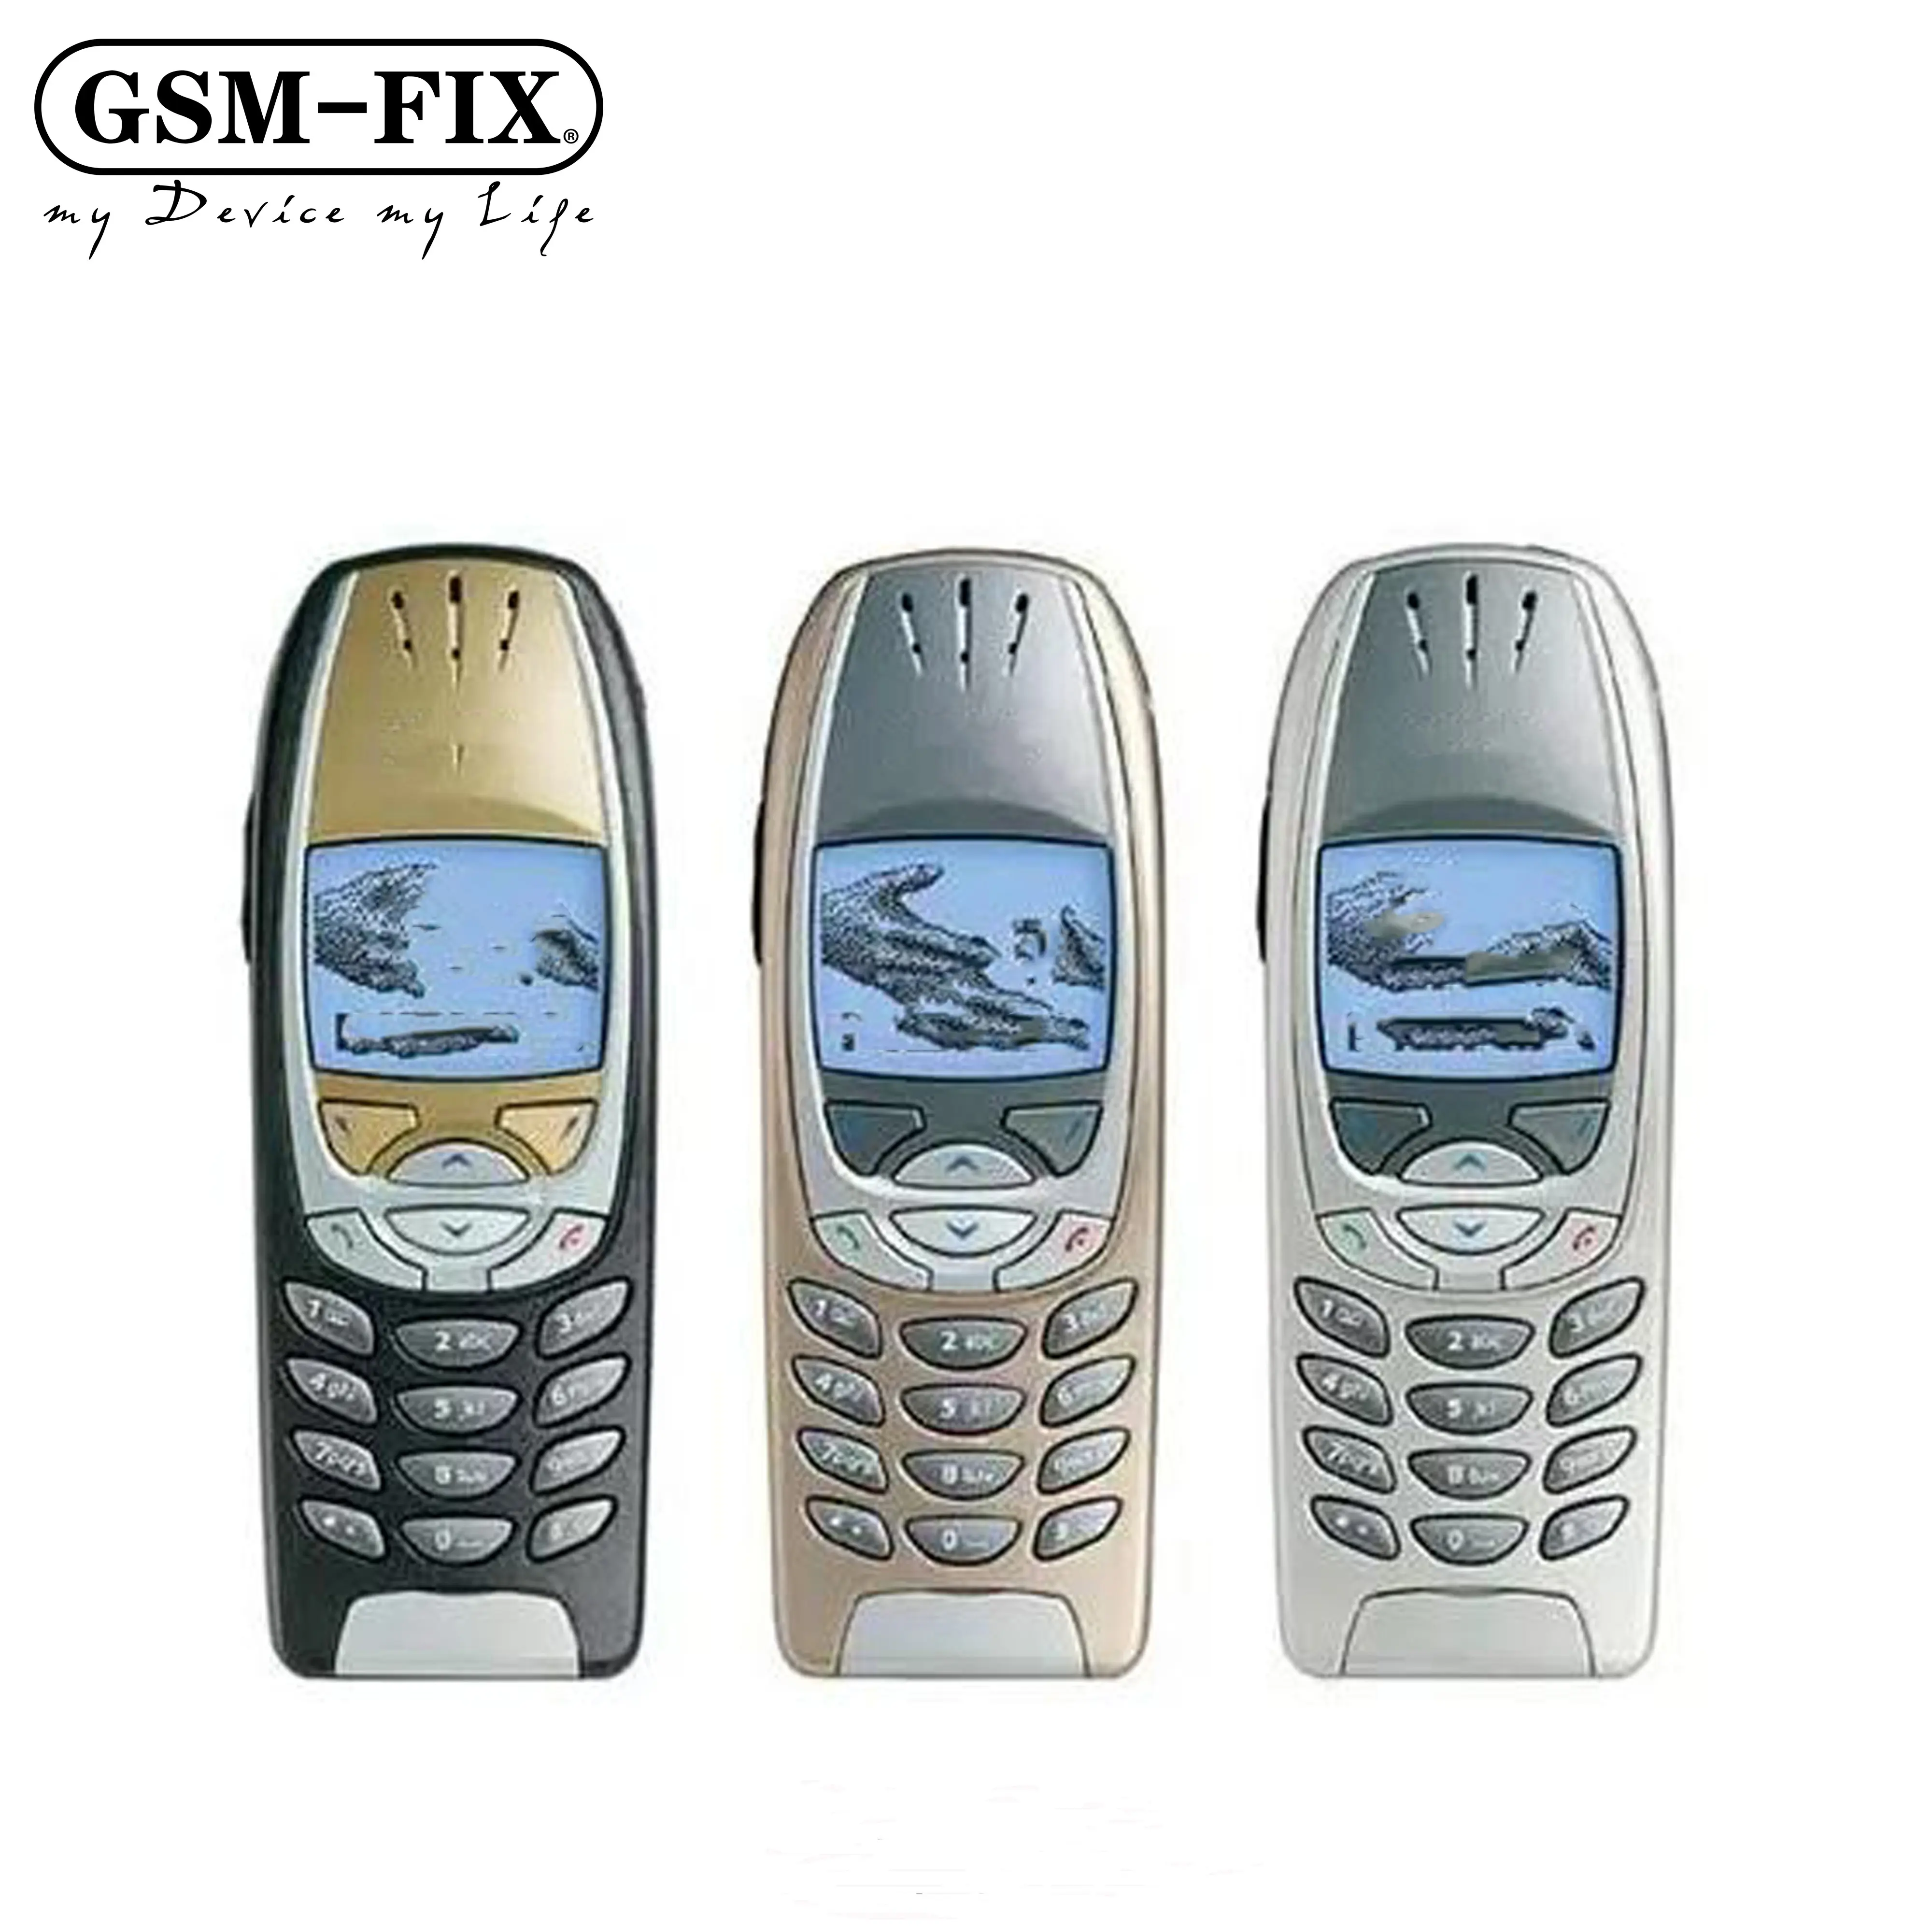 नोकिया 6310i GSM-FIX के लिए मूल सुपर सस्ता जीएसएम बार मोबाइल सेल फोन